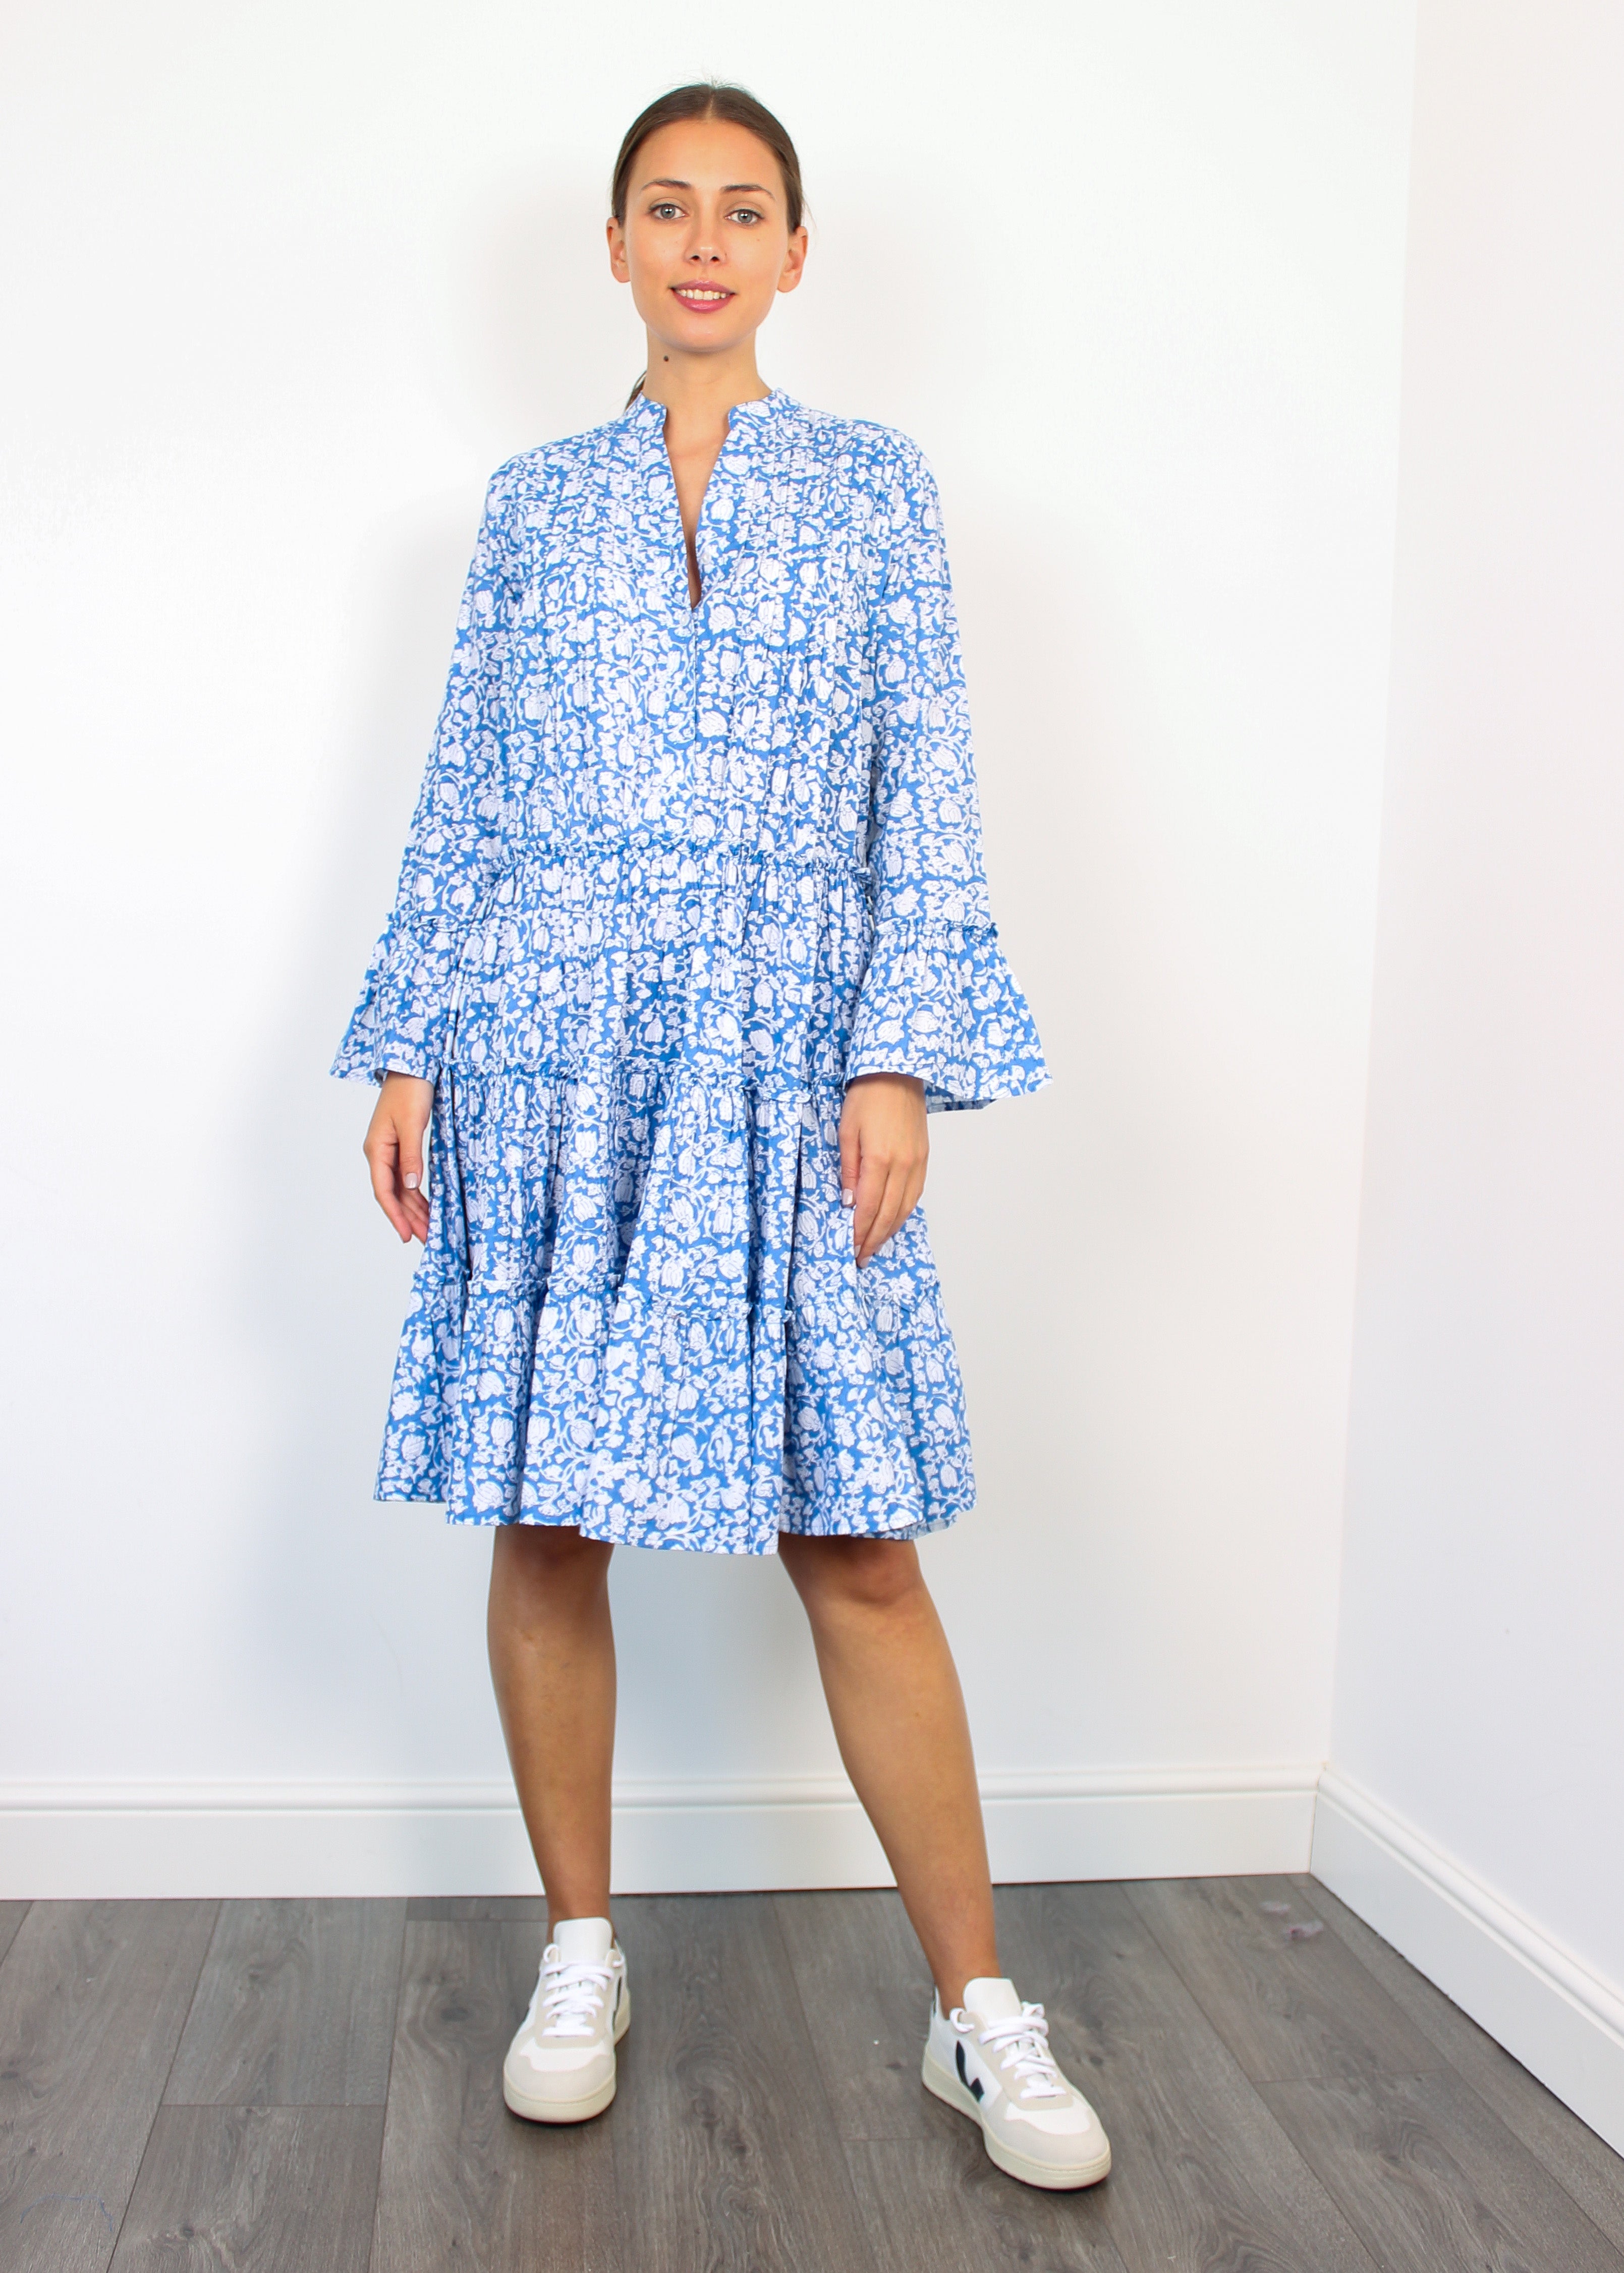 DREAM Elora Dress in Block Print